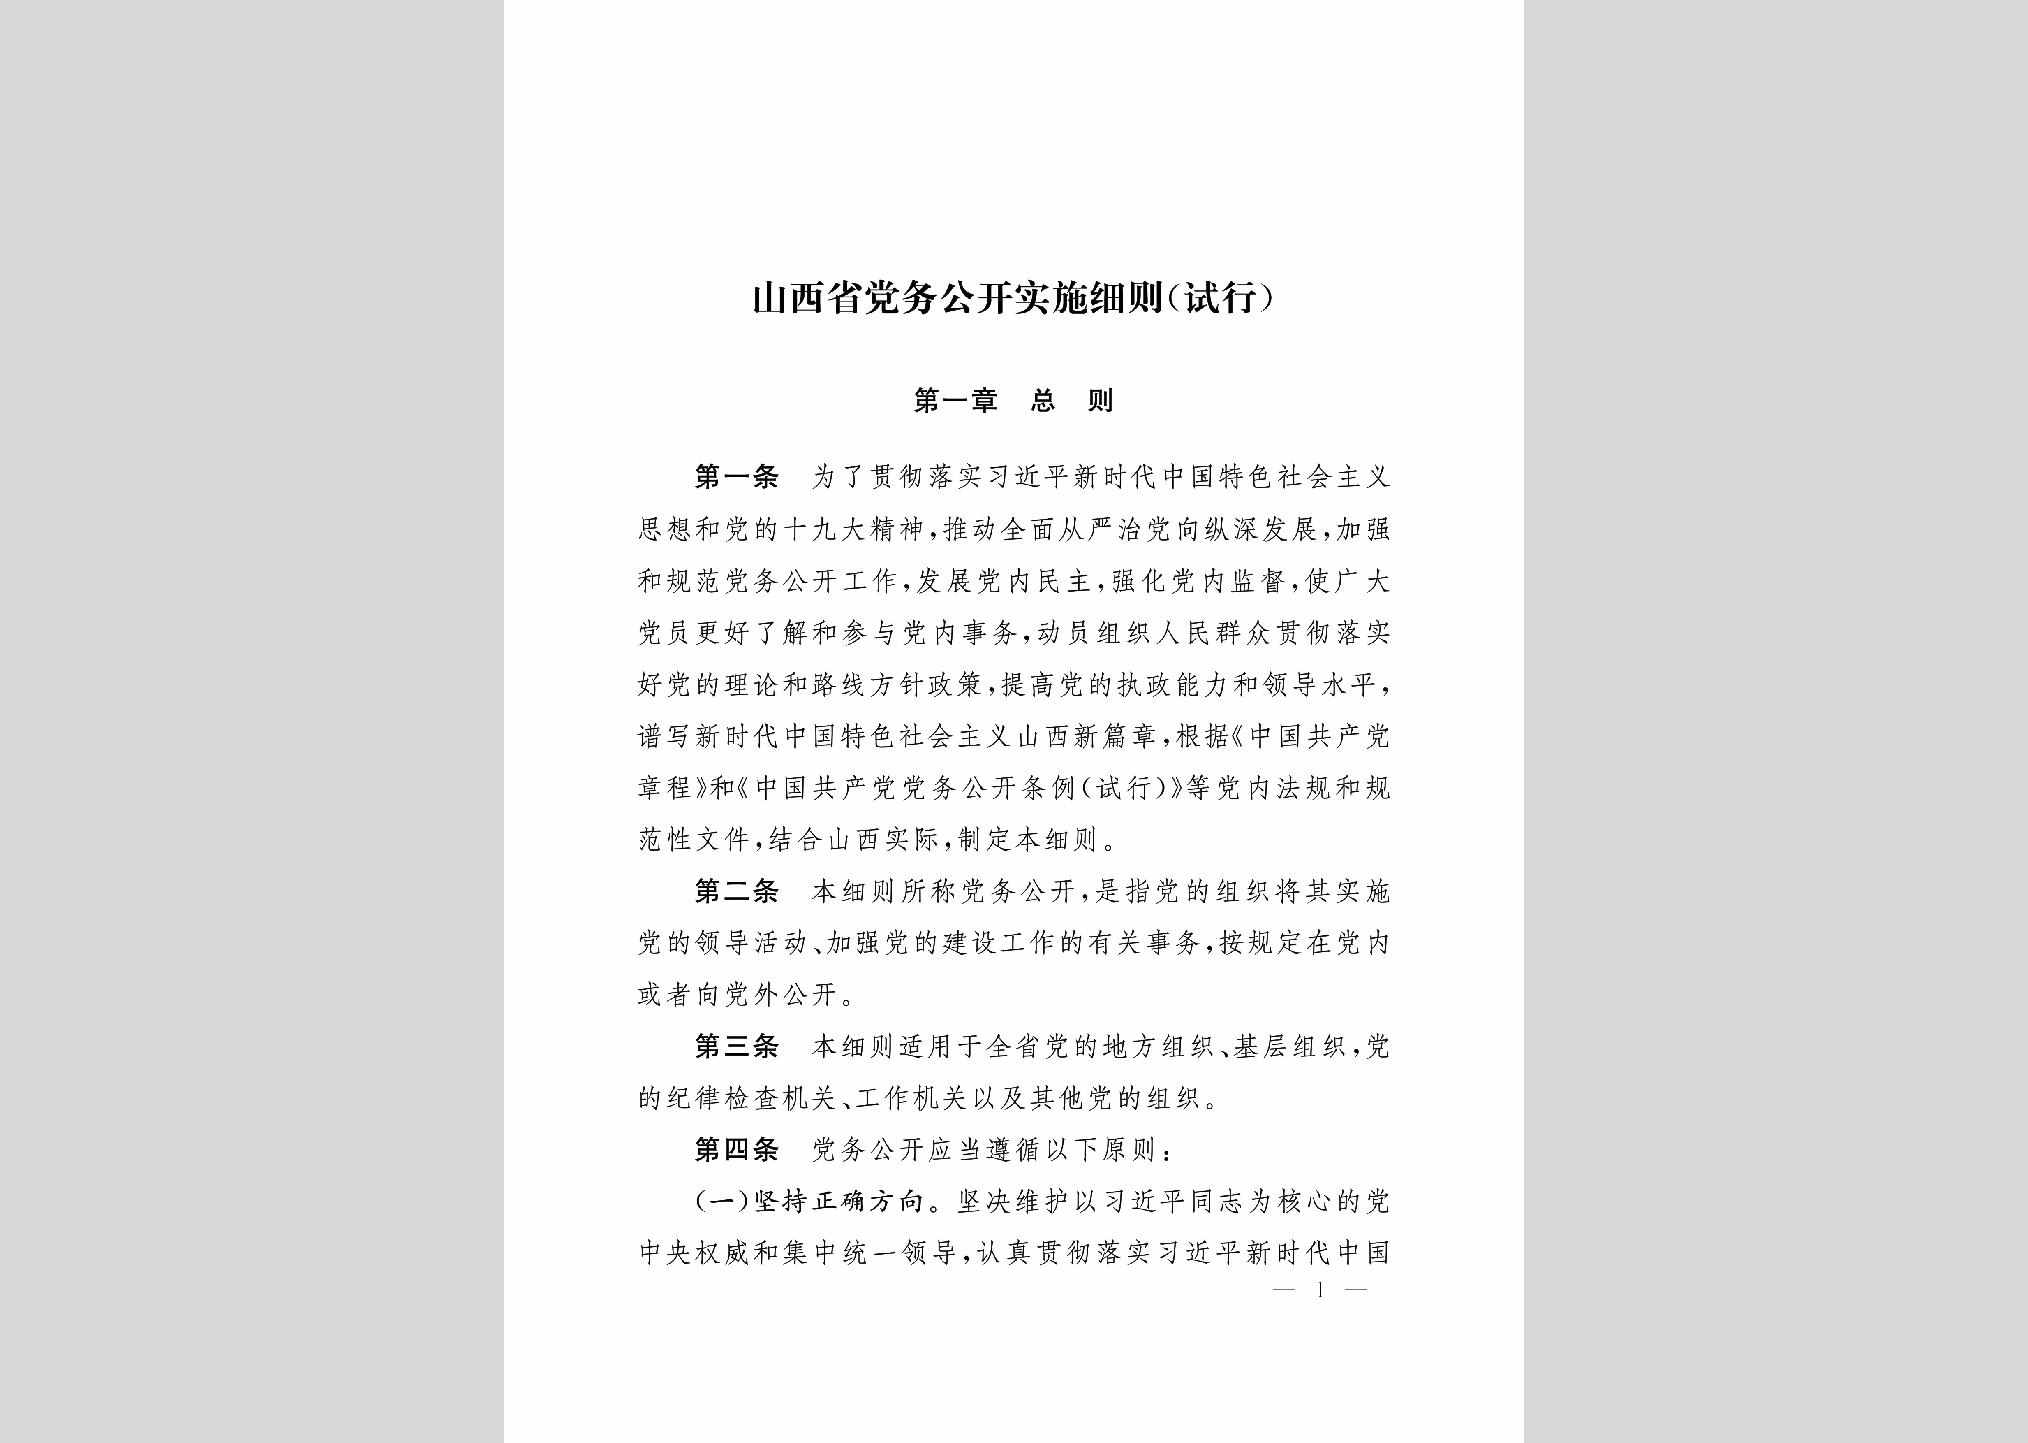 SX-DWGKSSXZ-2018：山西省党务公开实施细则（试行）